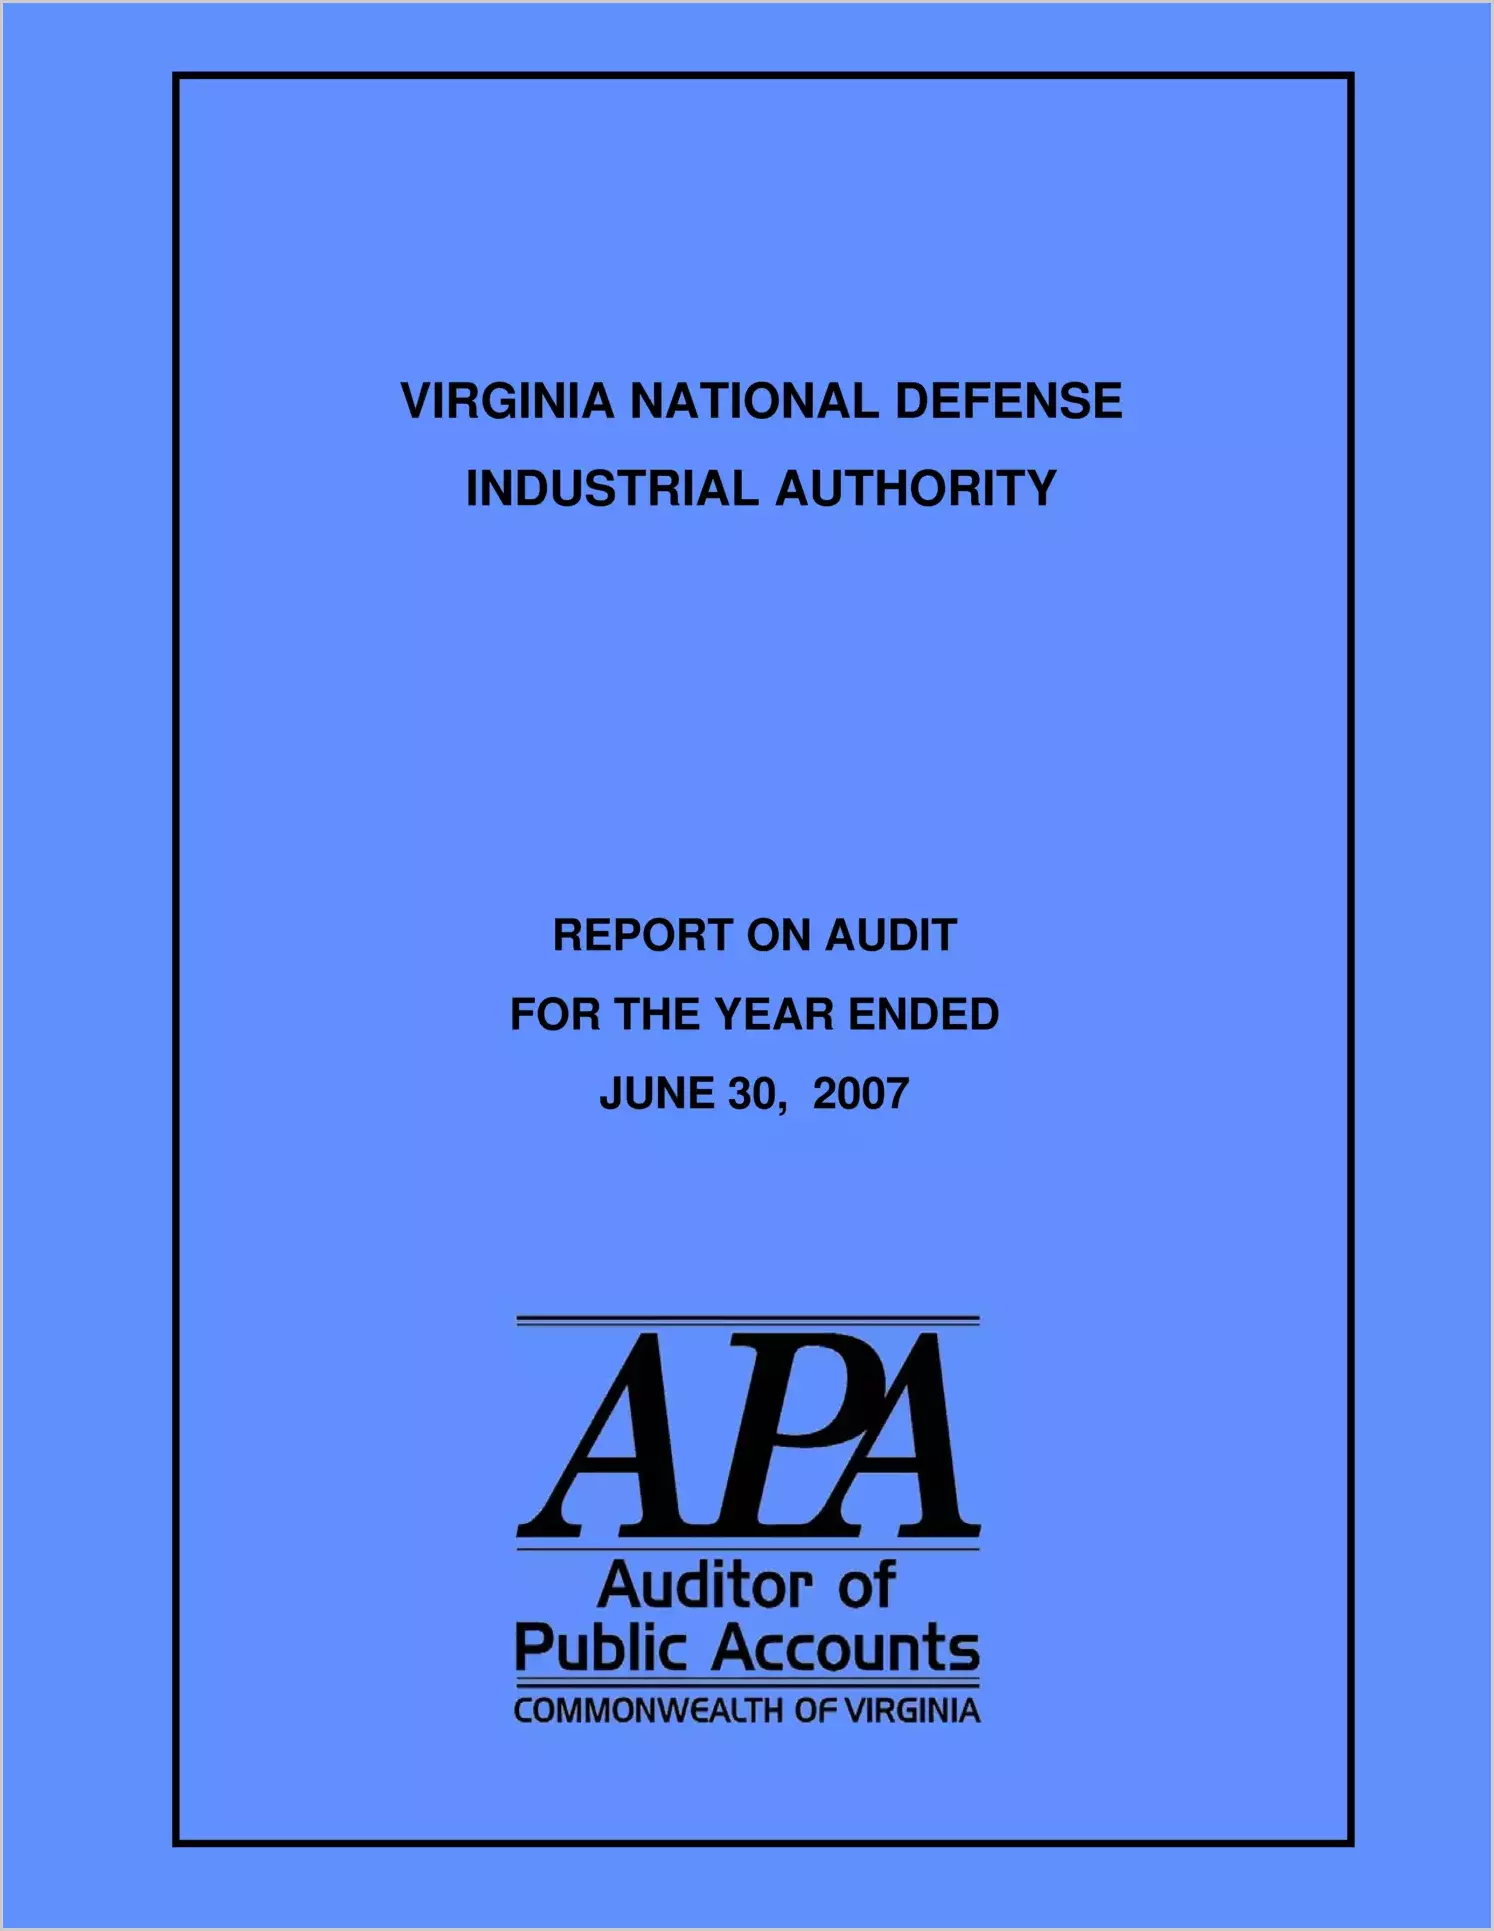 Virginia National Defense Industrial Authority